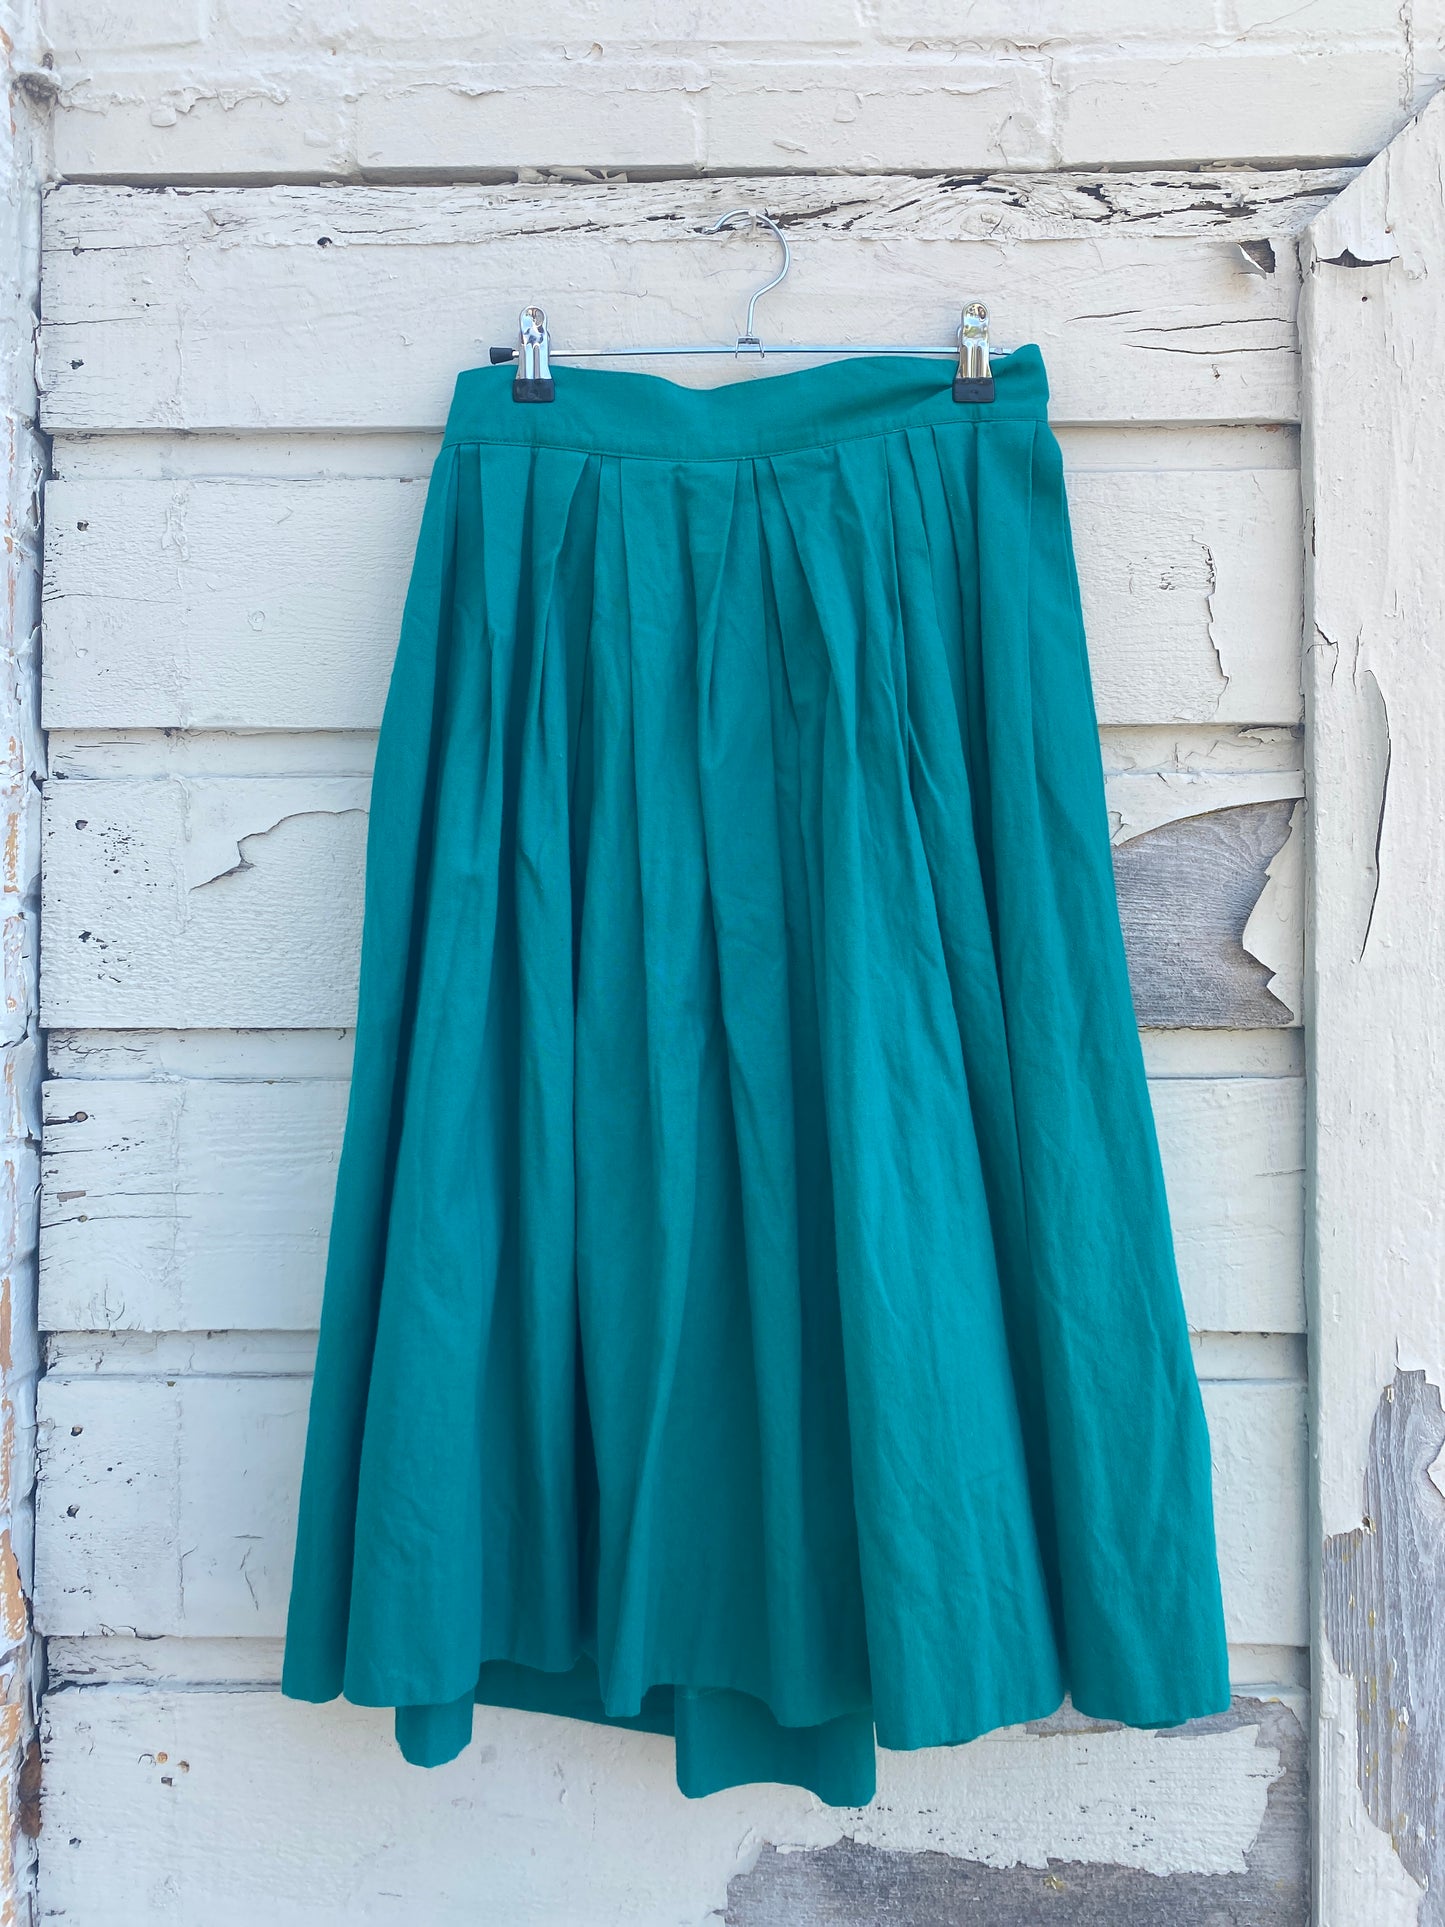 Vintage Christian Dior Separates Pleated Skirt medium/small 27in waist